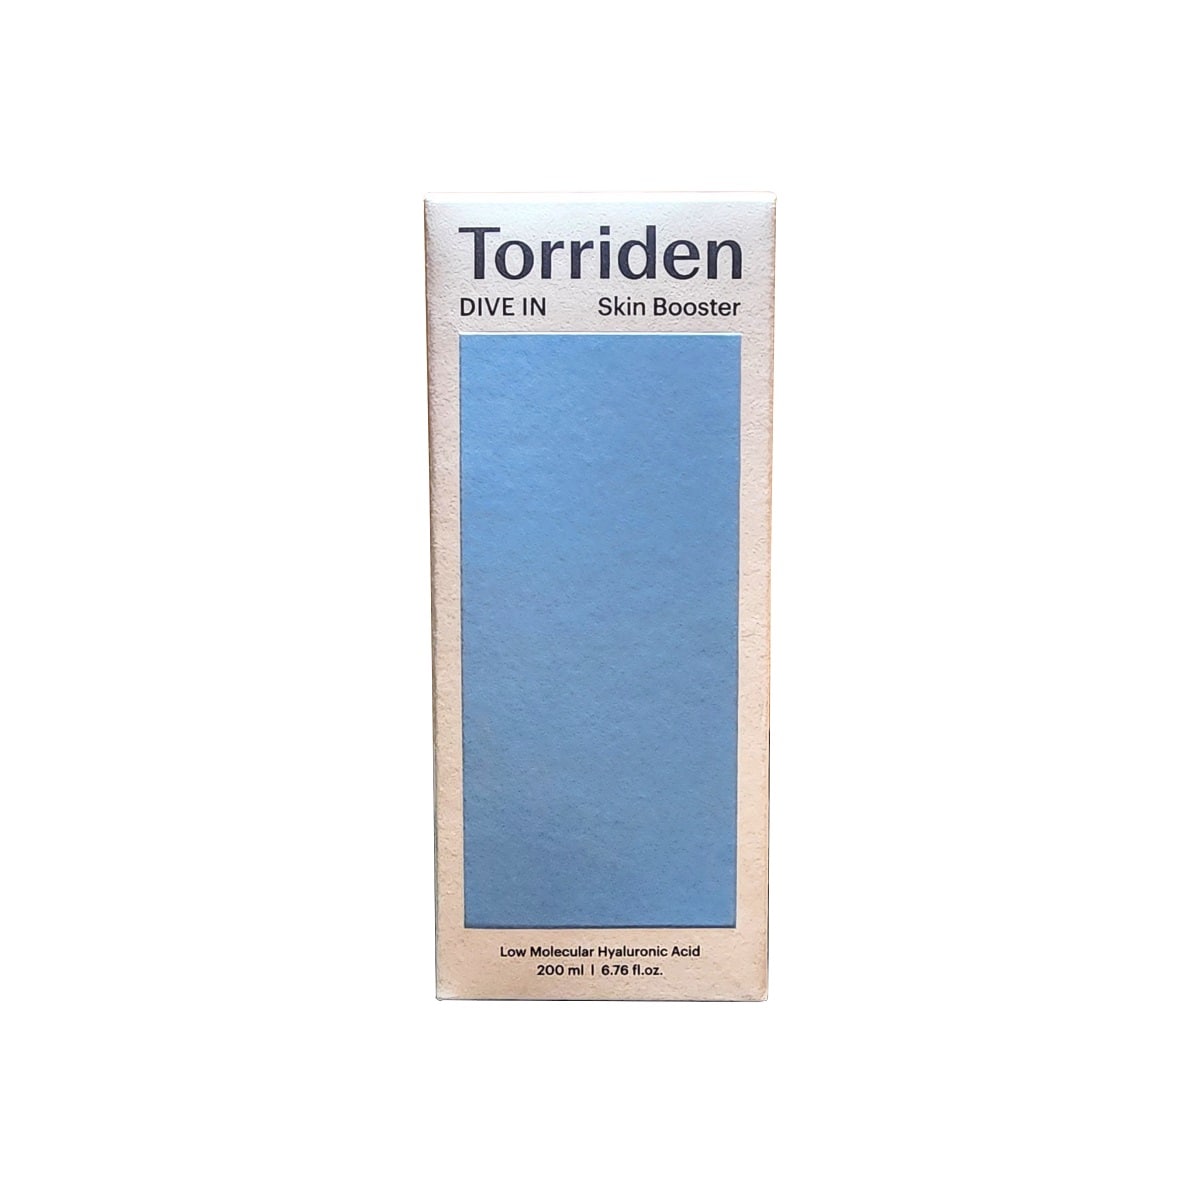 Product label for Torriden Dive-In Low Molecular Hyaluronic Acid Skin Booster (200 mL)